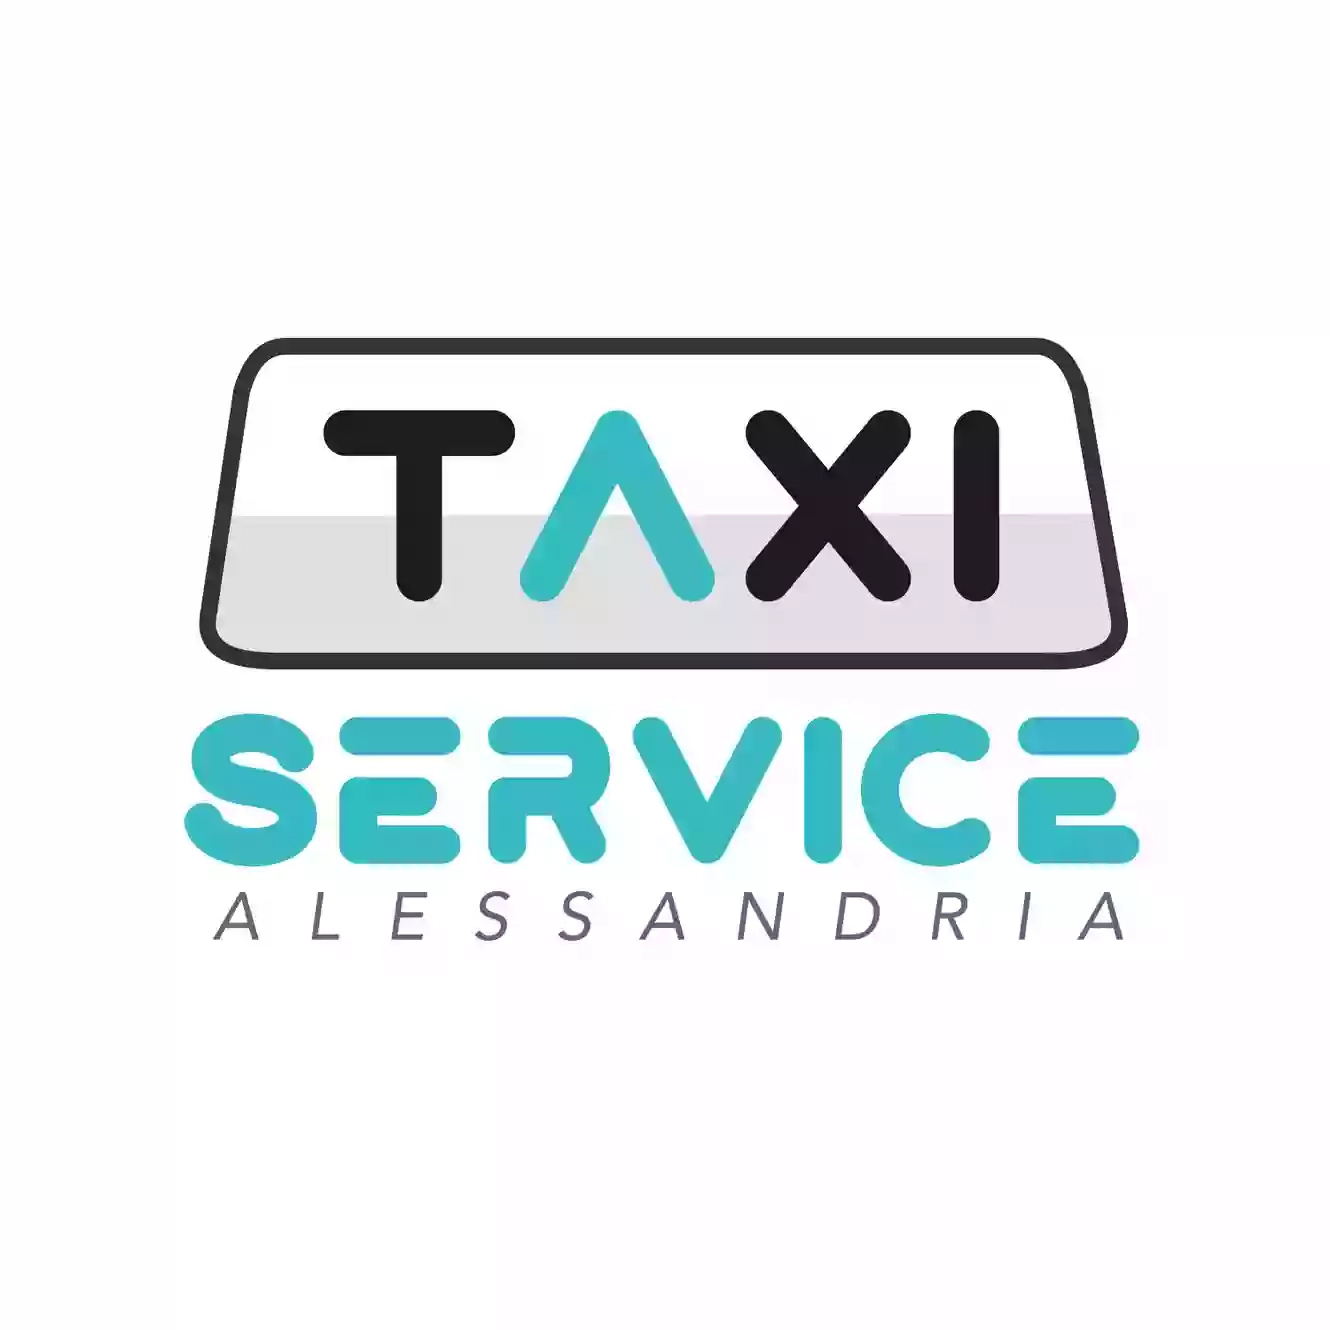 TAXI SERVICE ALESSANDRIA